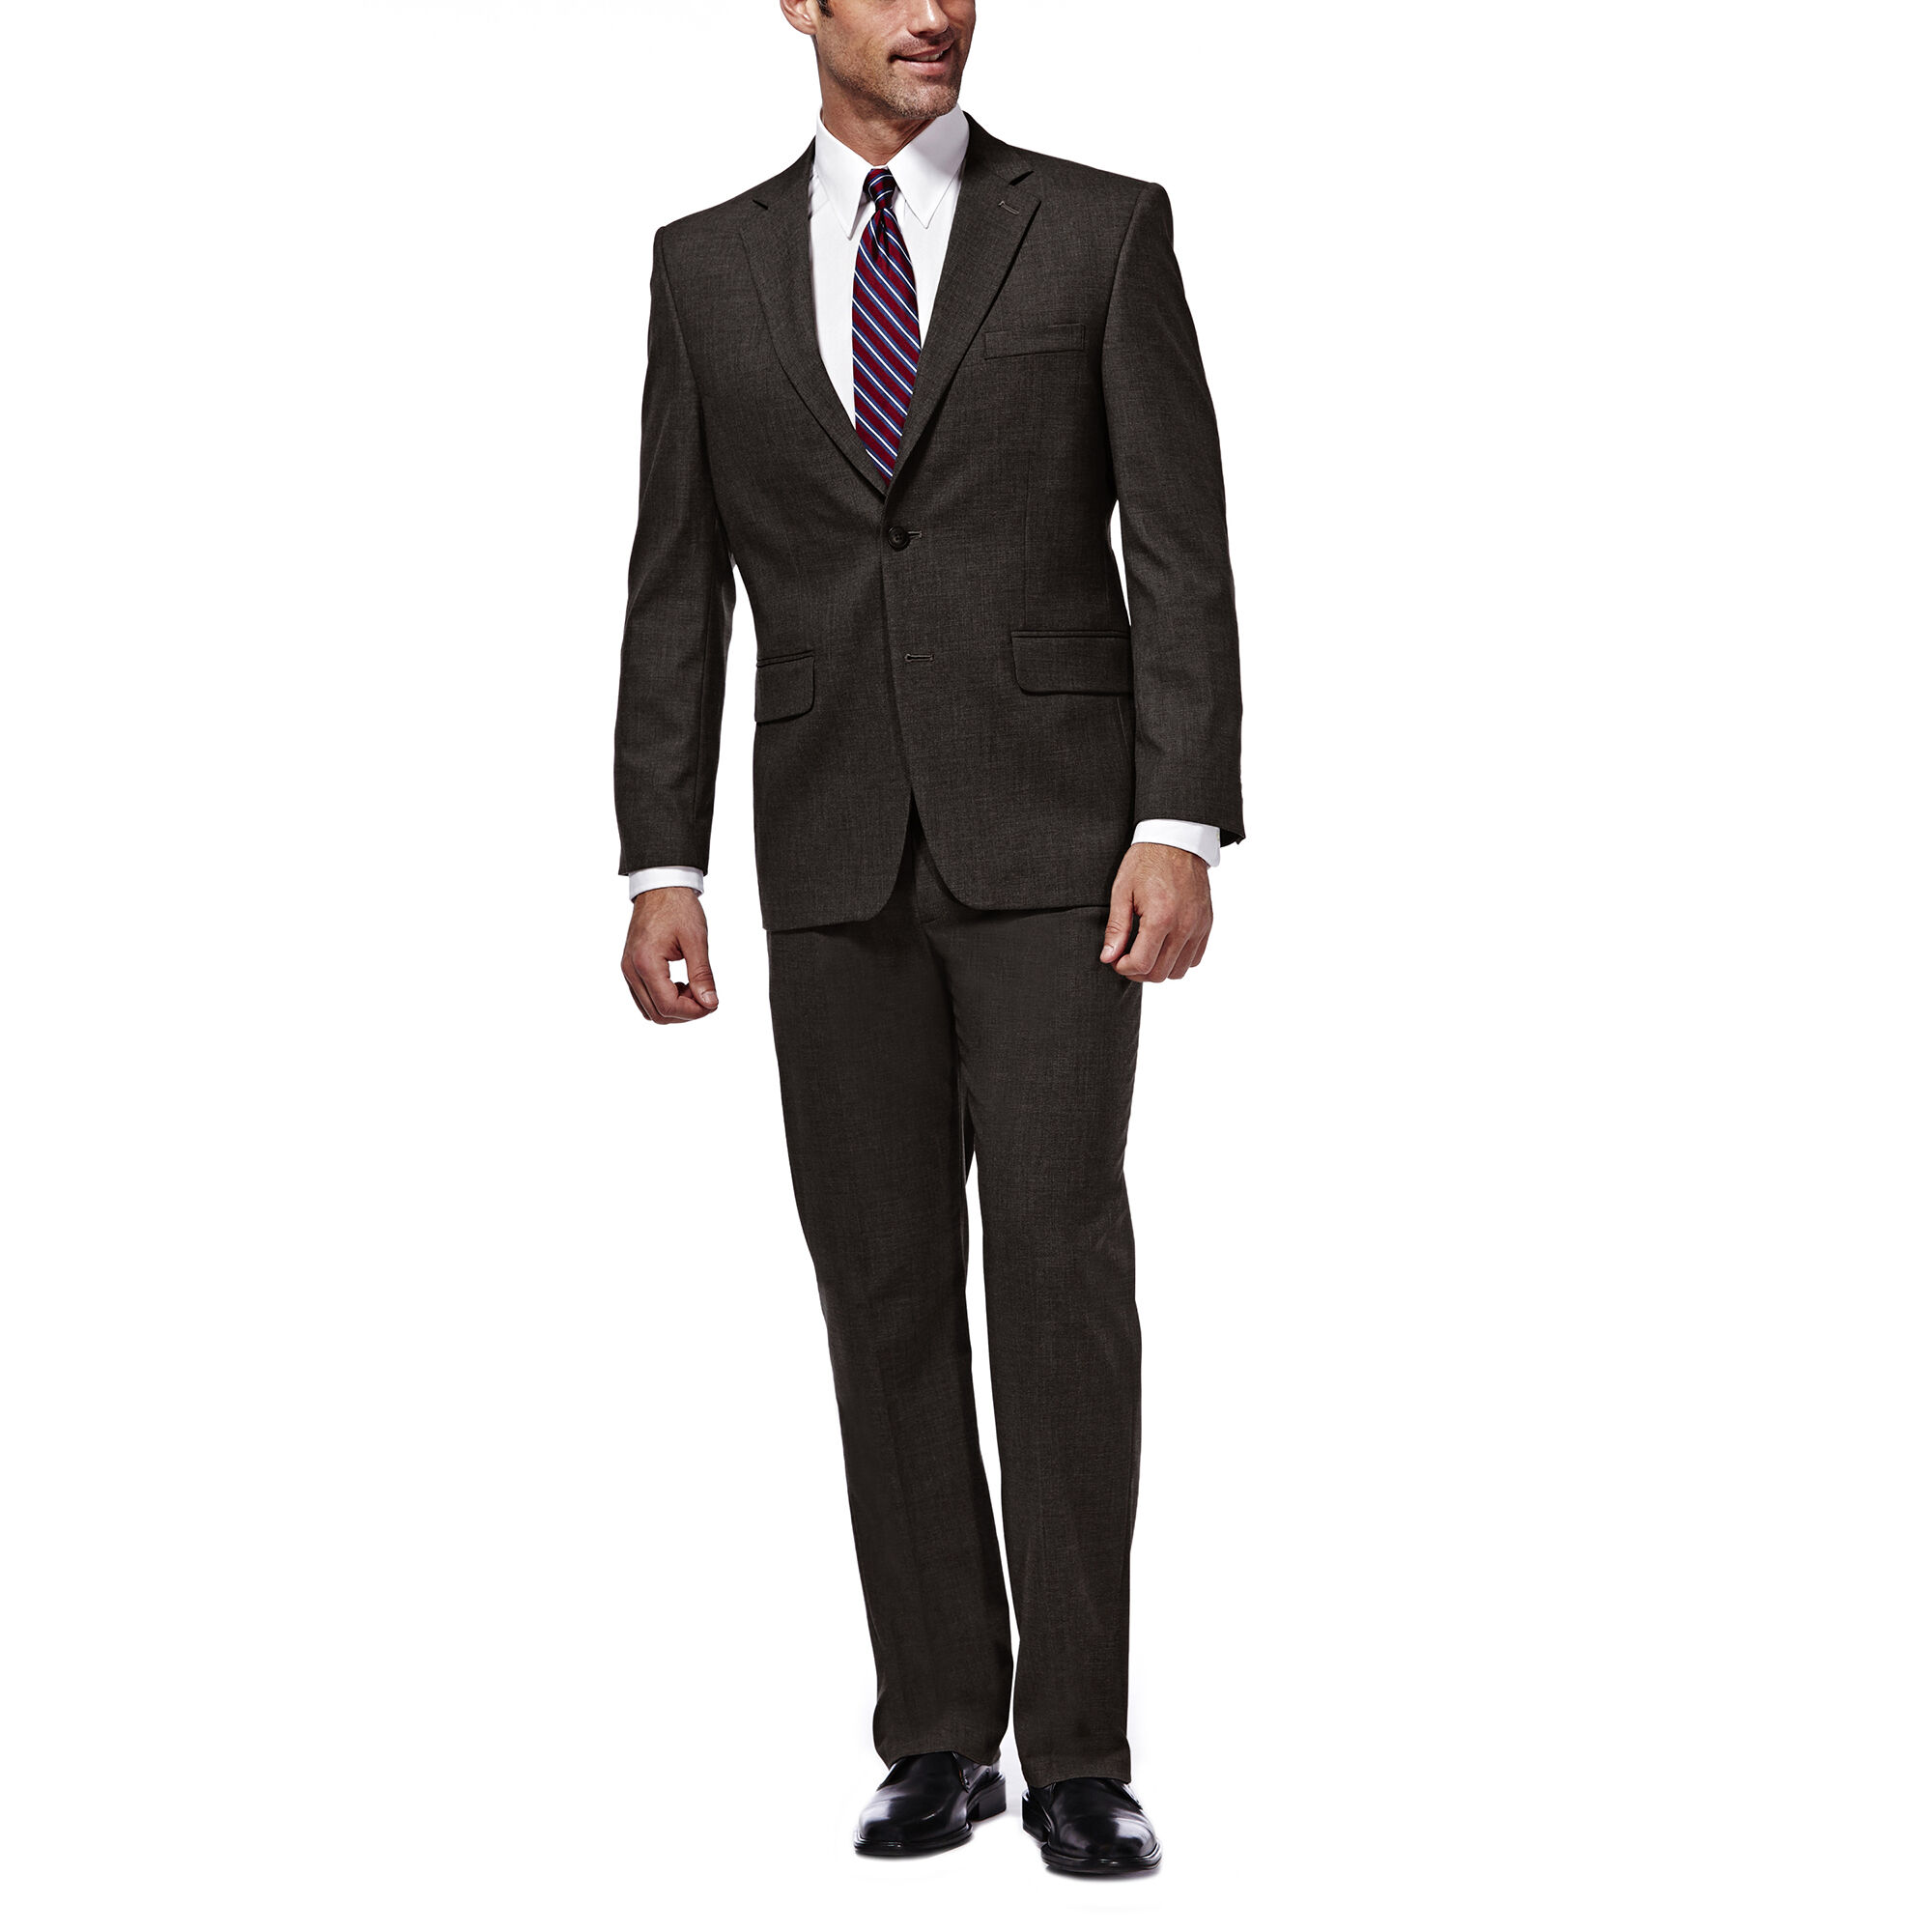 J.M. Haggar Premium Stretch Suit Jacket Chocolate (HZ00182 Clothing Suits) photo